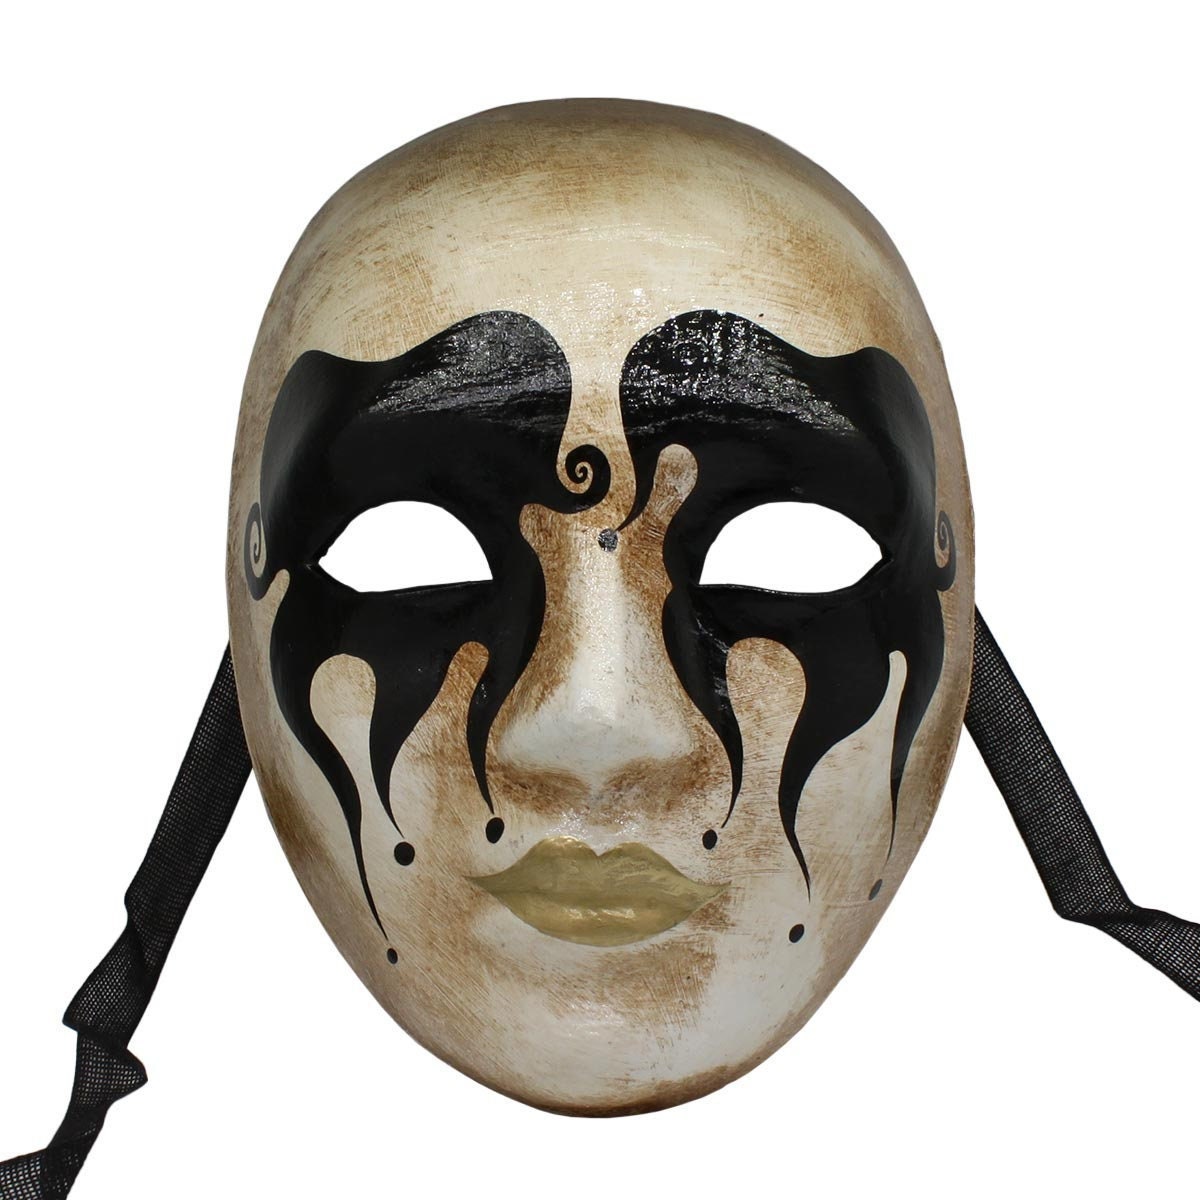 Full Face (Volto) - Decorative Masks - Italy Mask